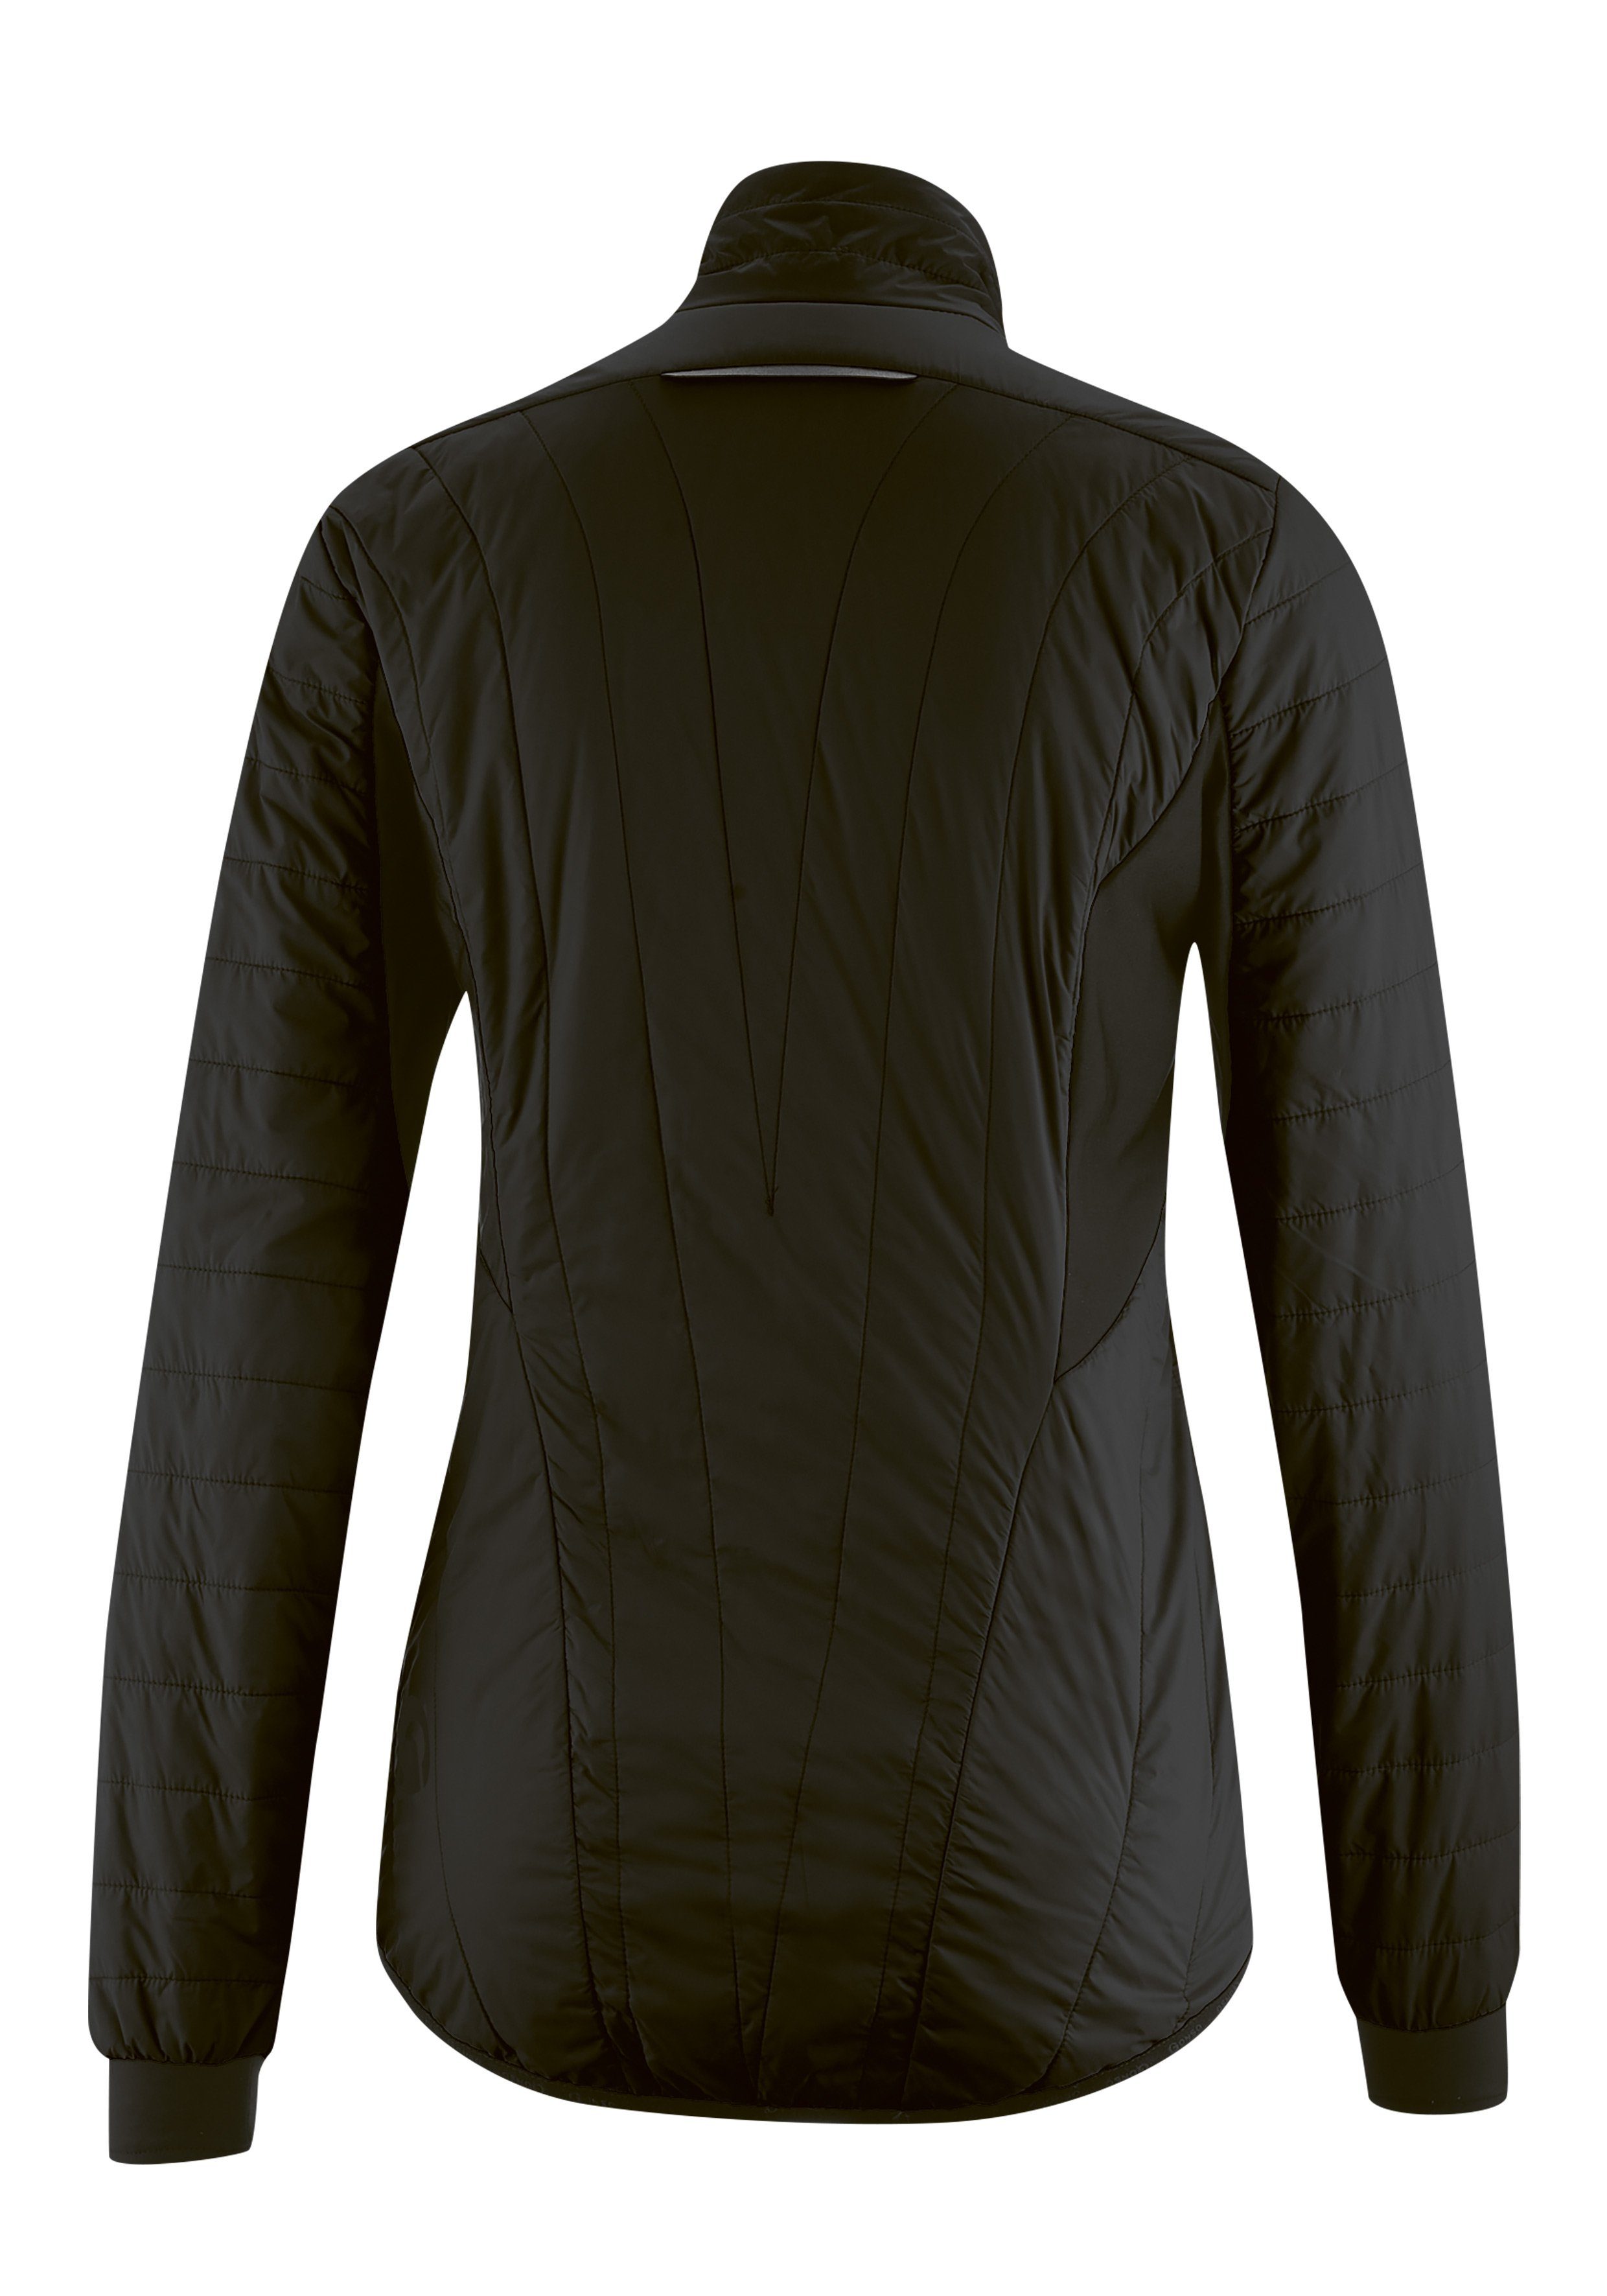 atmungsaktiv und schwarz Primaloft-Jacke, Damen Teixeira winddicht Gonso warm, Fahrradjacke